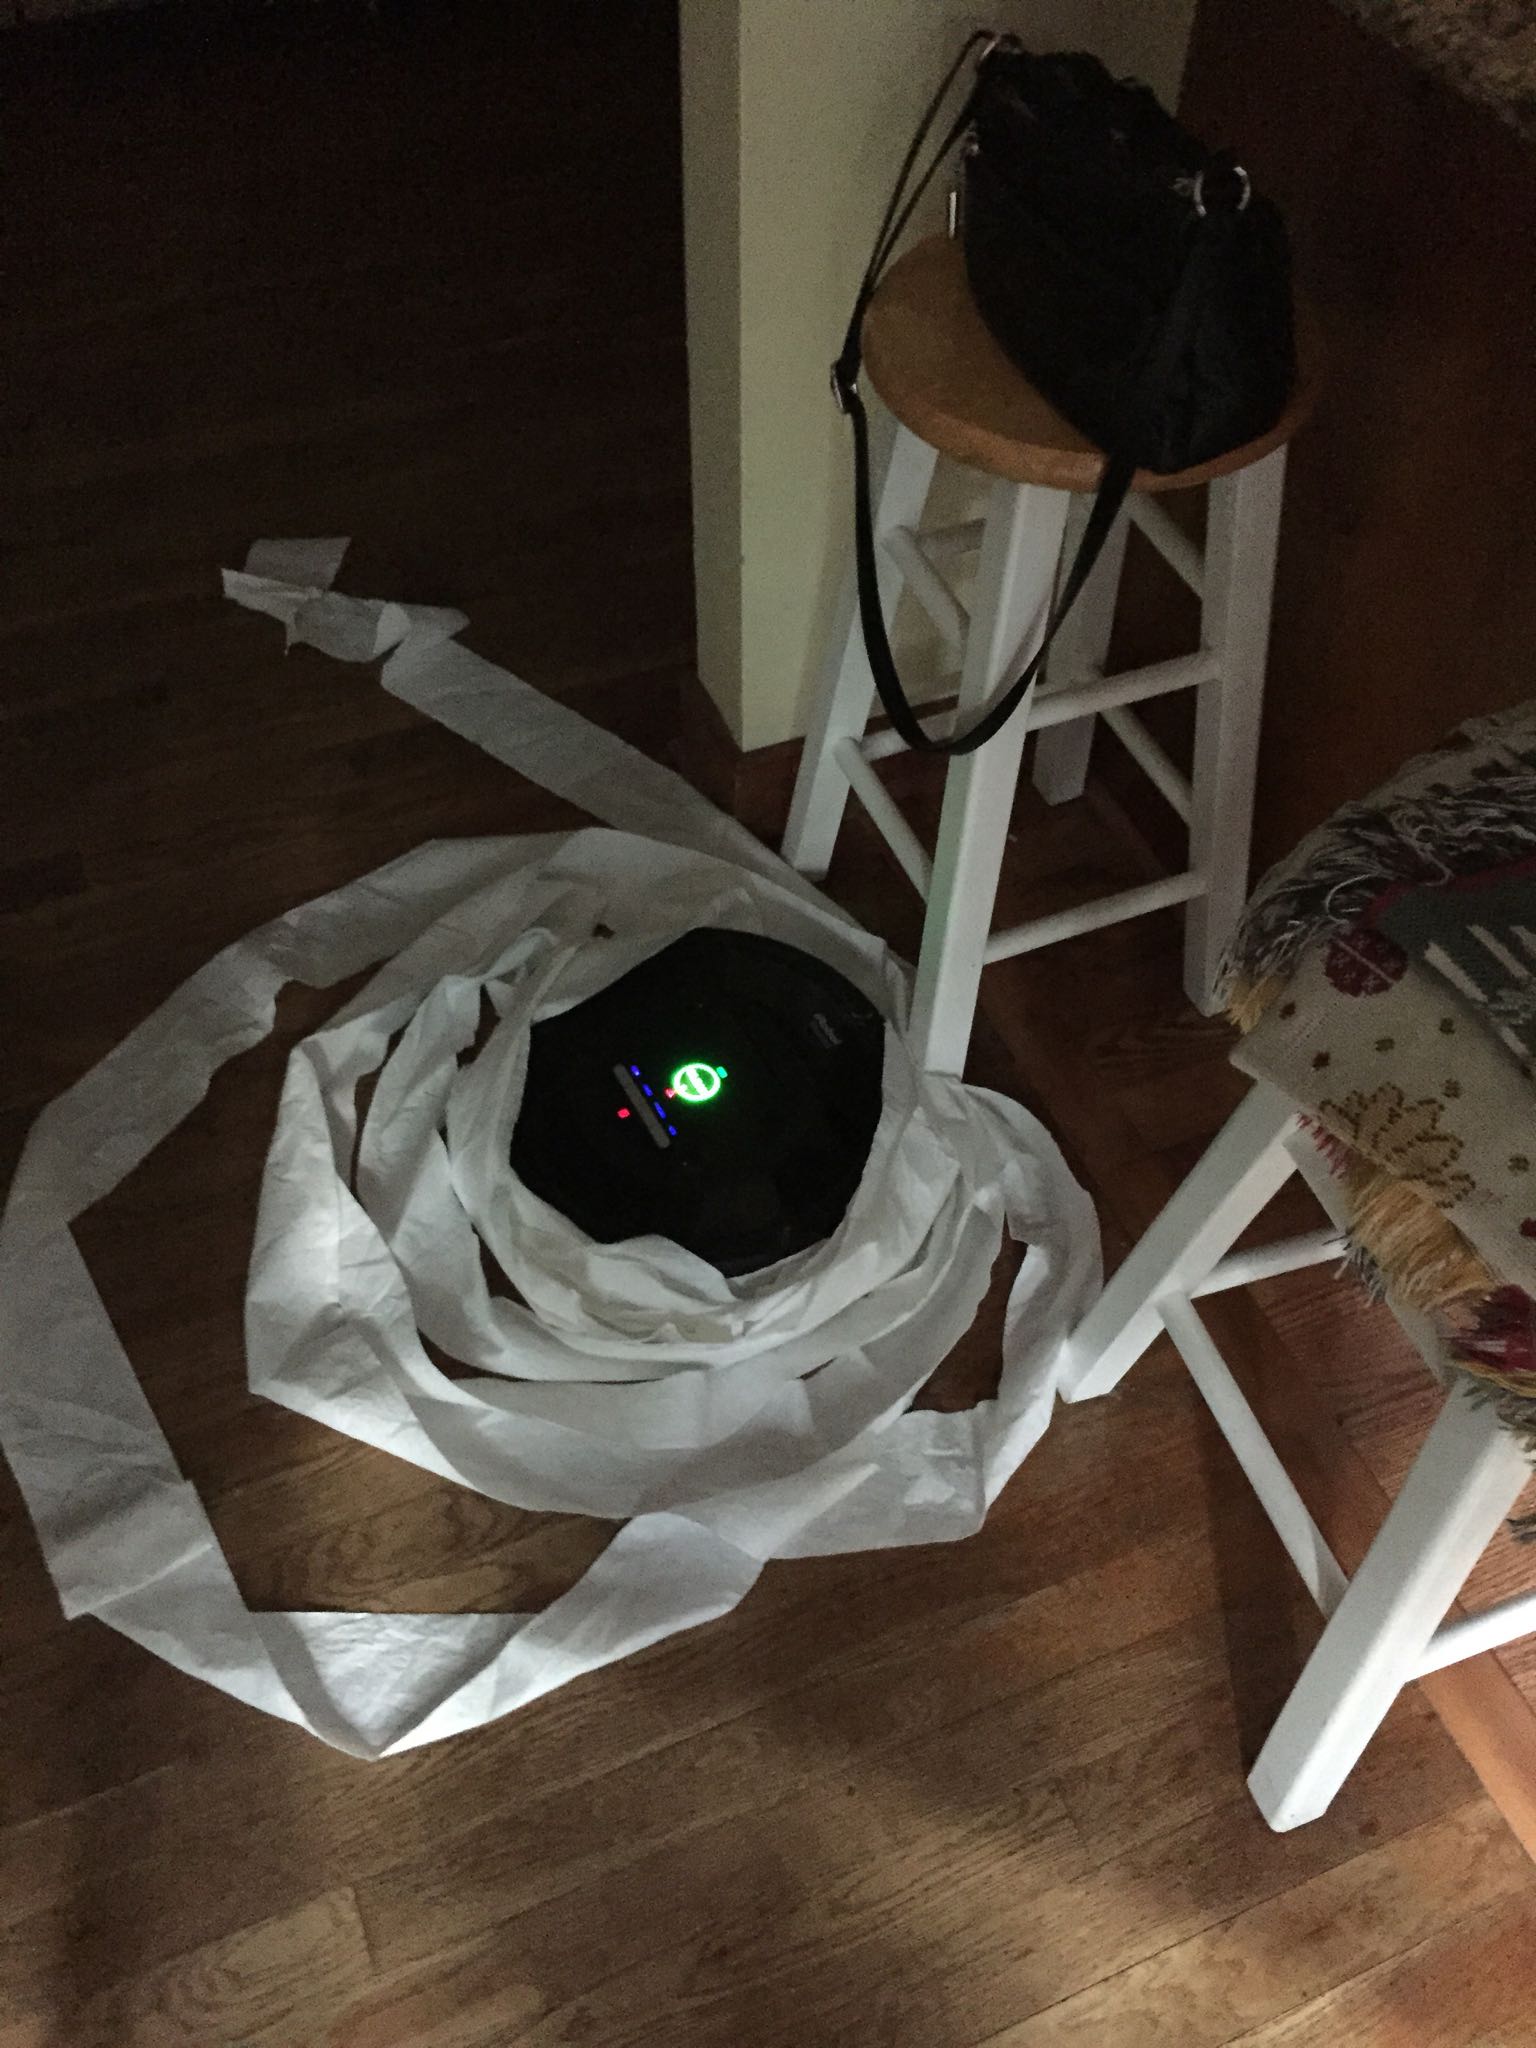 Mischievous Roomba this morning...